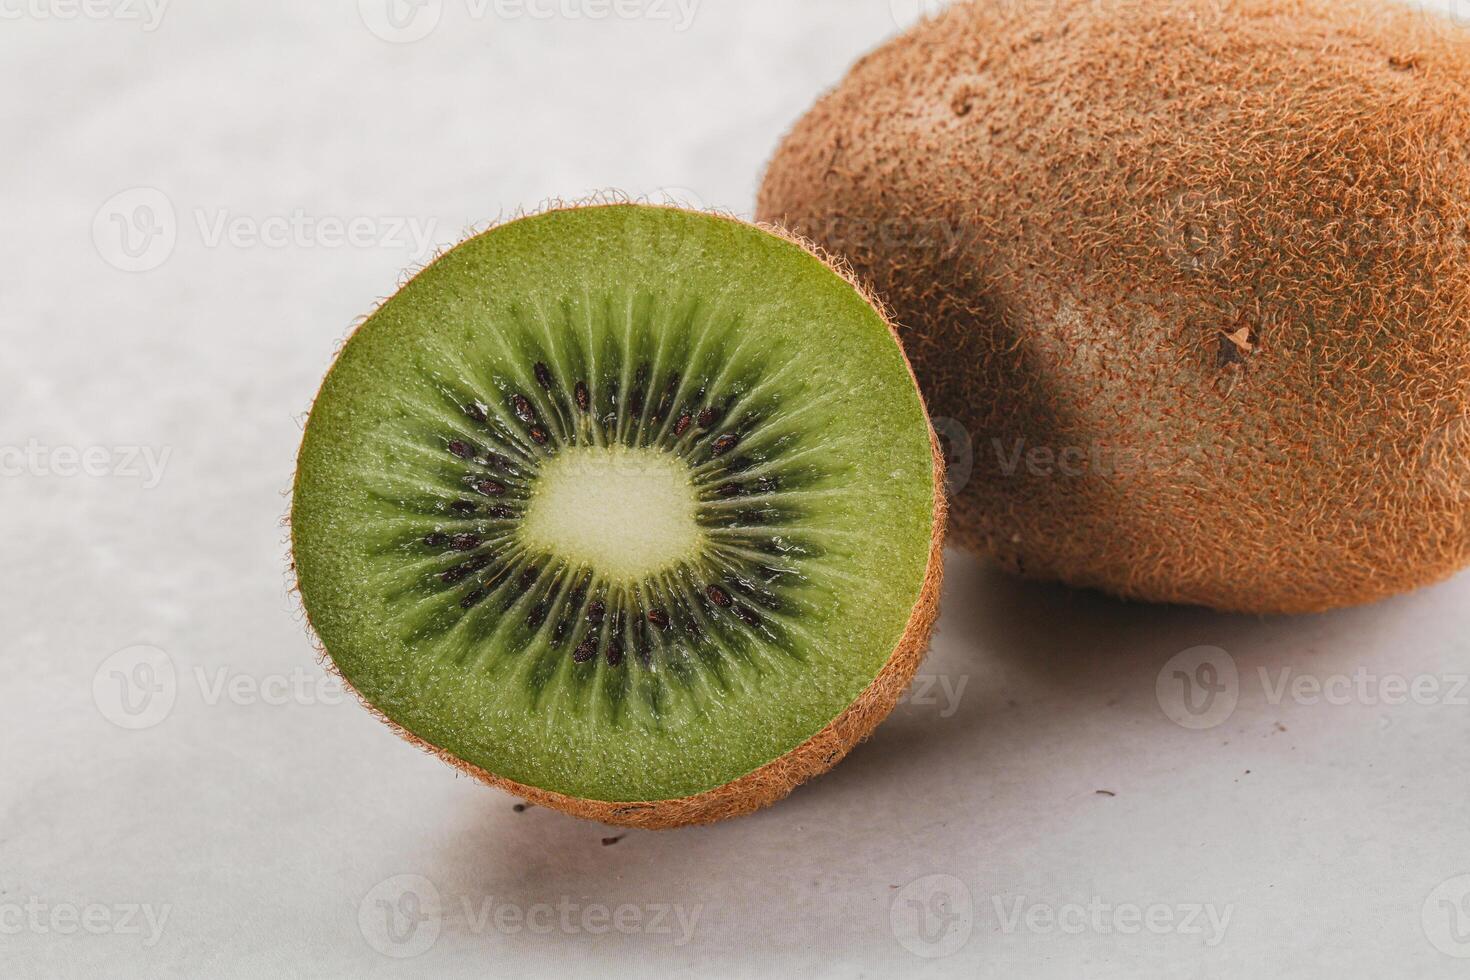 dulce y jugoso kiwi Fruta foto